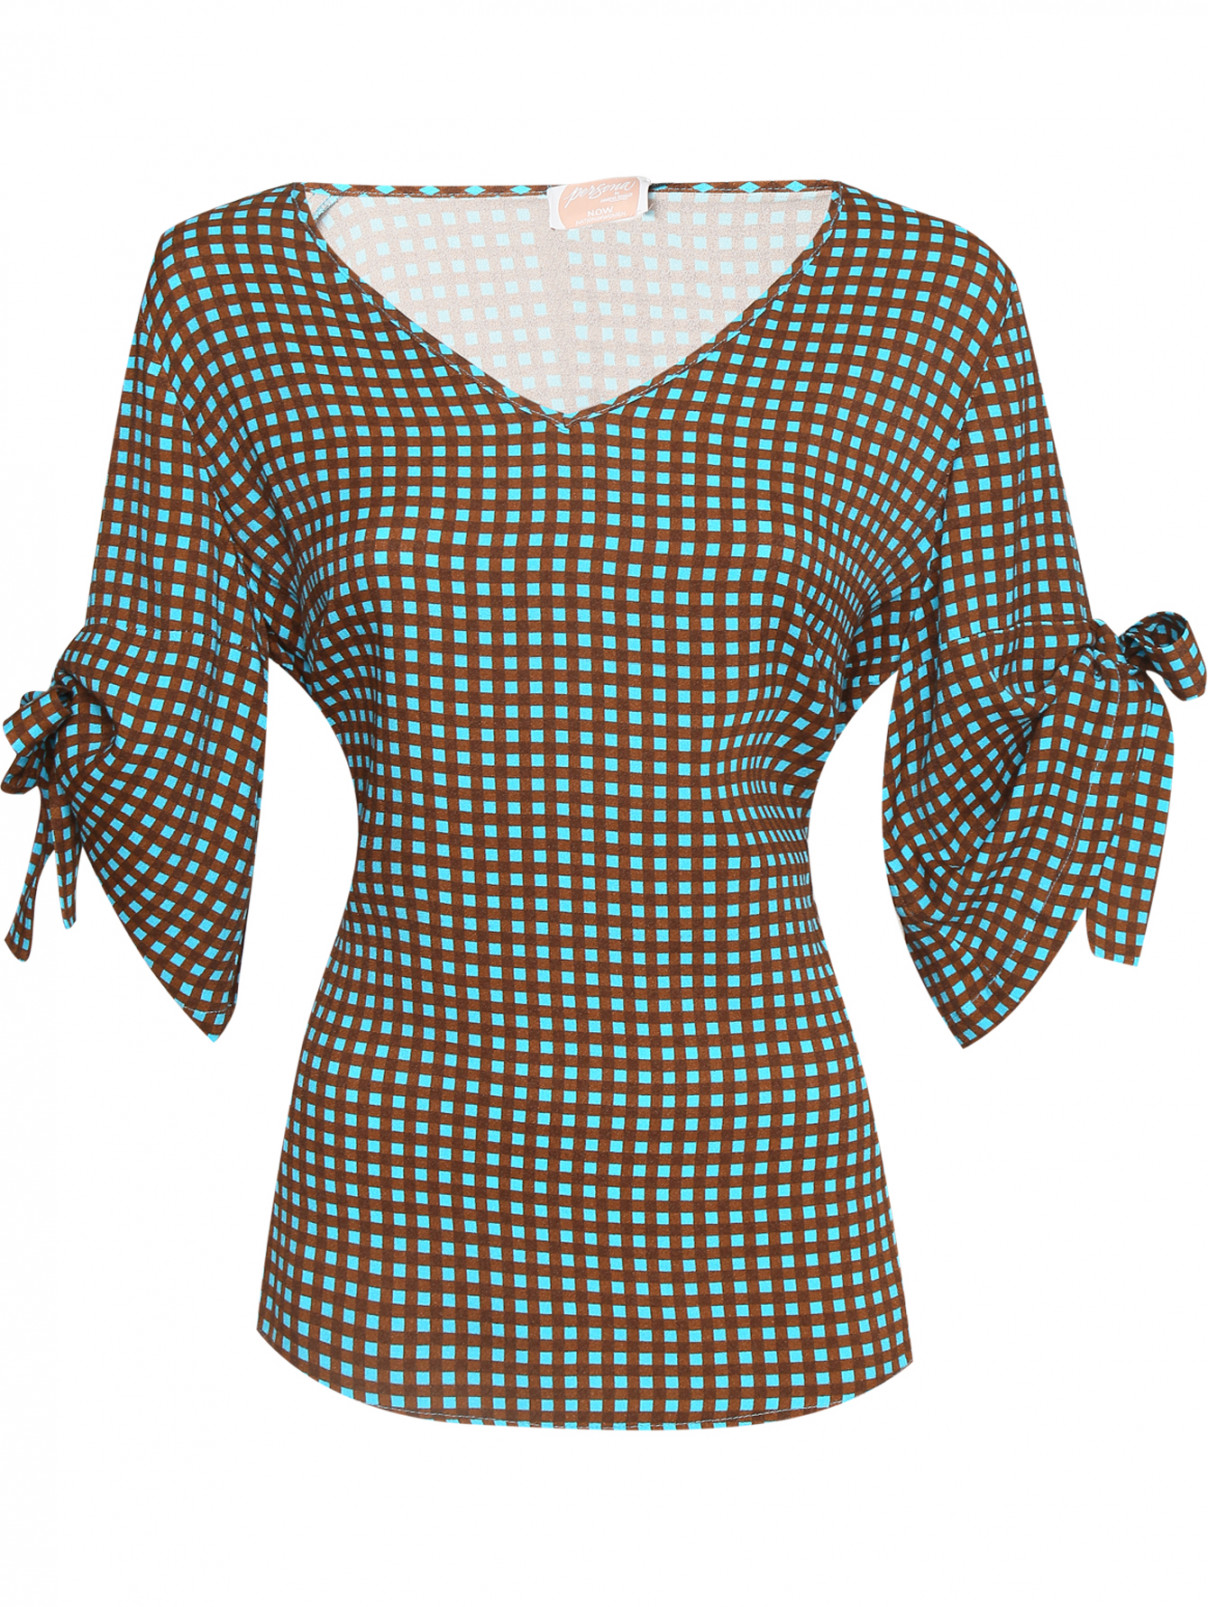 Блуза с узором и завязками на рукавах Persona by Marina Rinaldi  –  Общий вид  – Цвет:  Узор